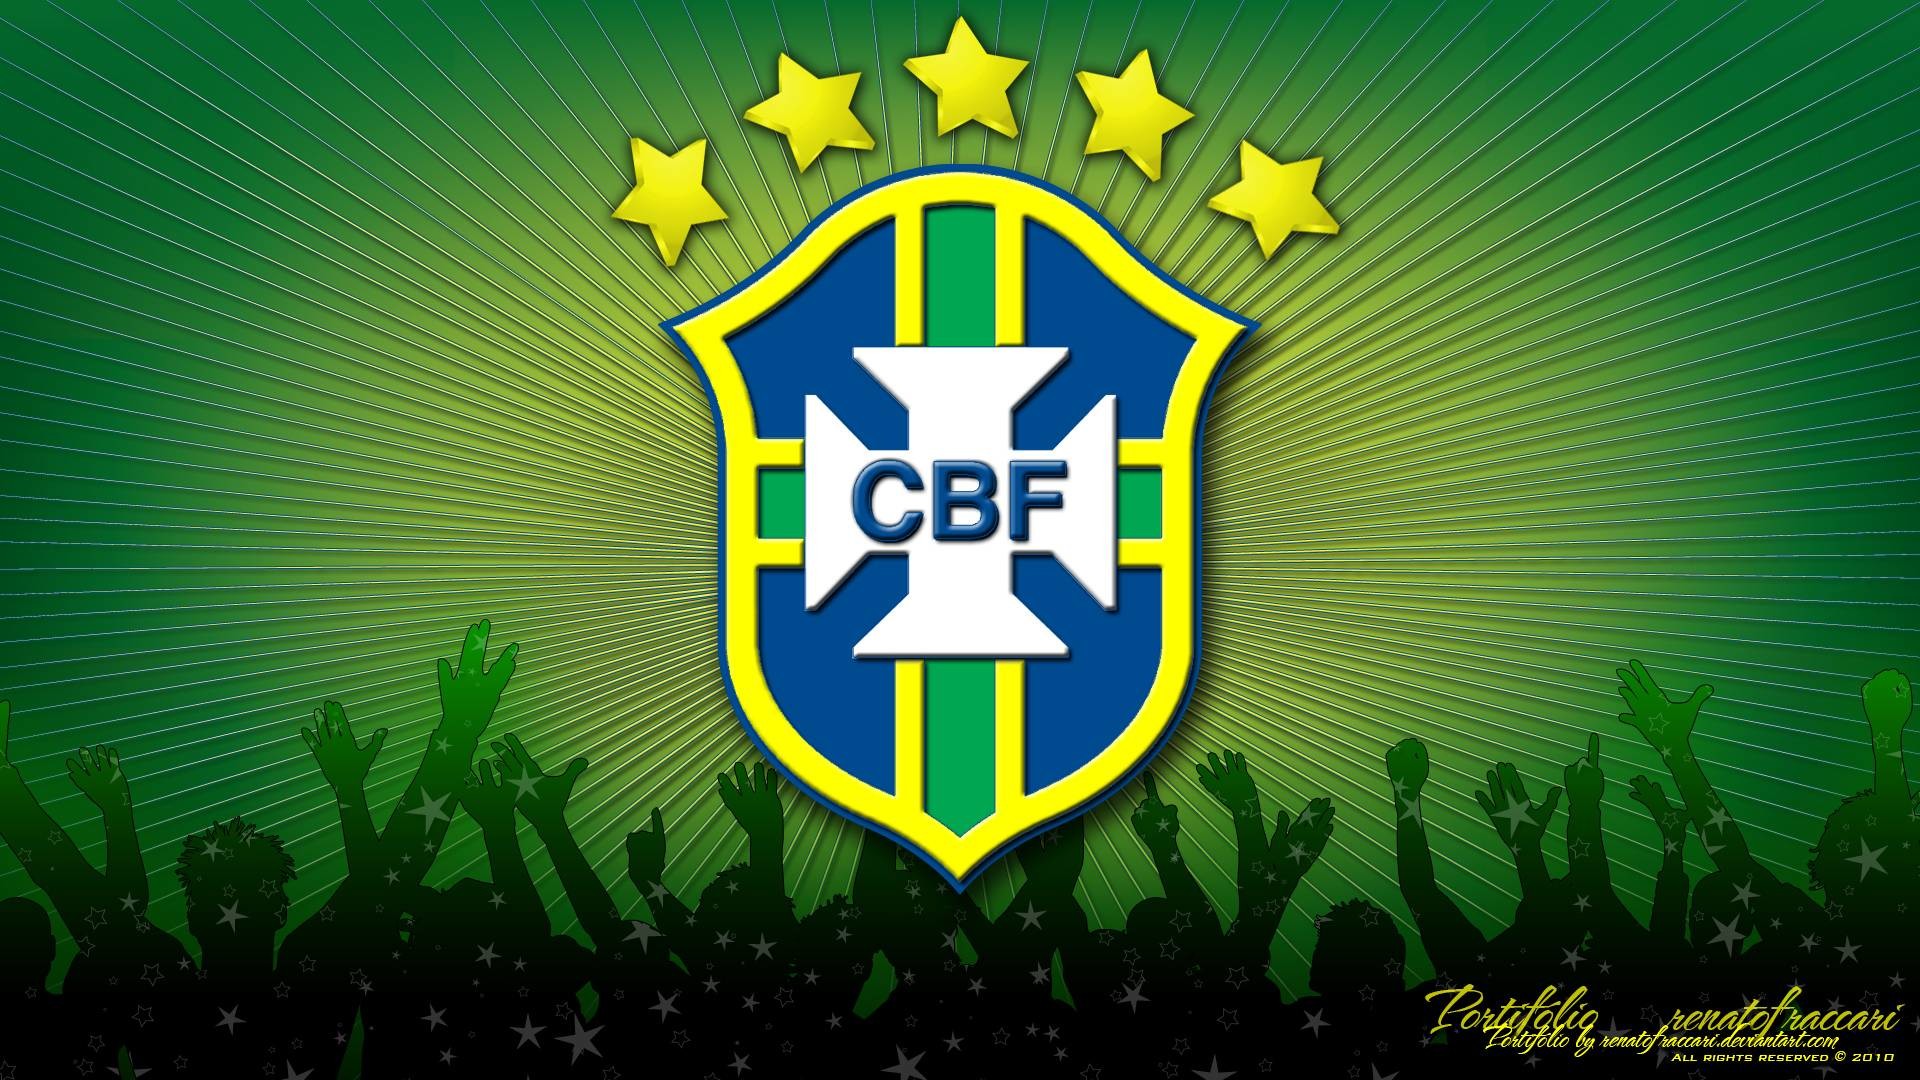 Brazil football team desktop wallpapers in best resolutions